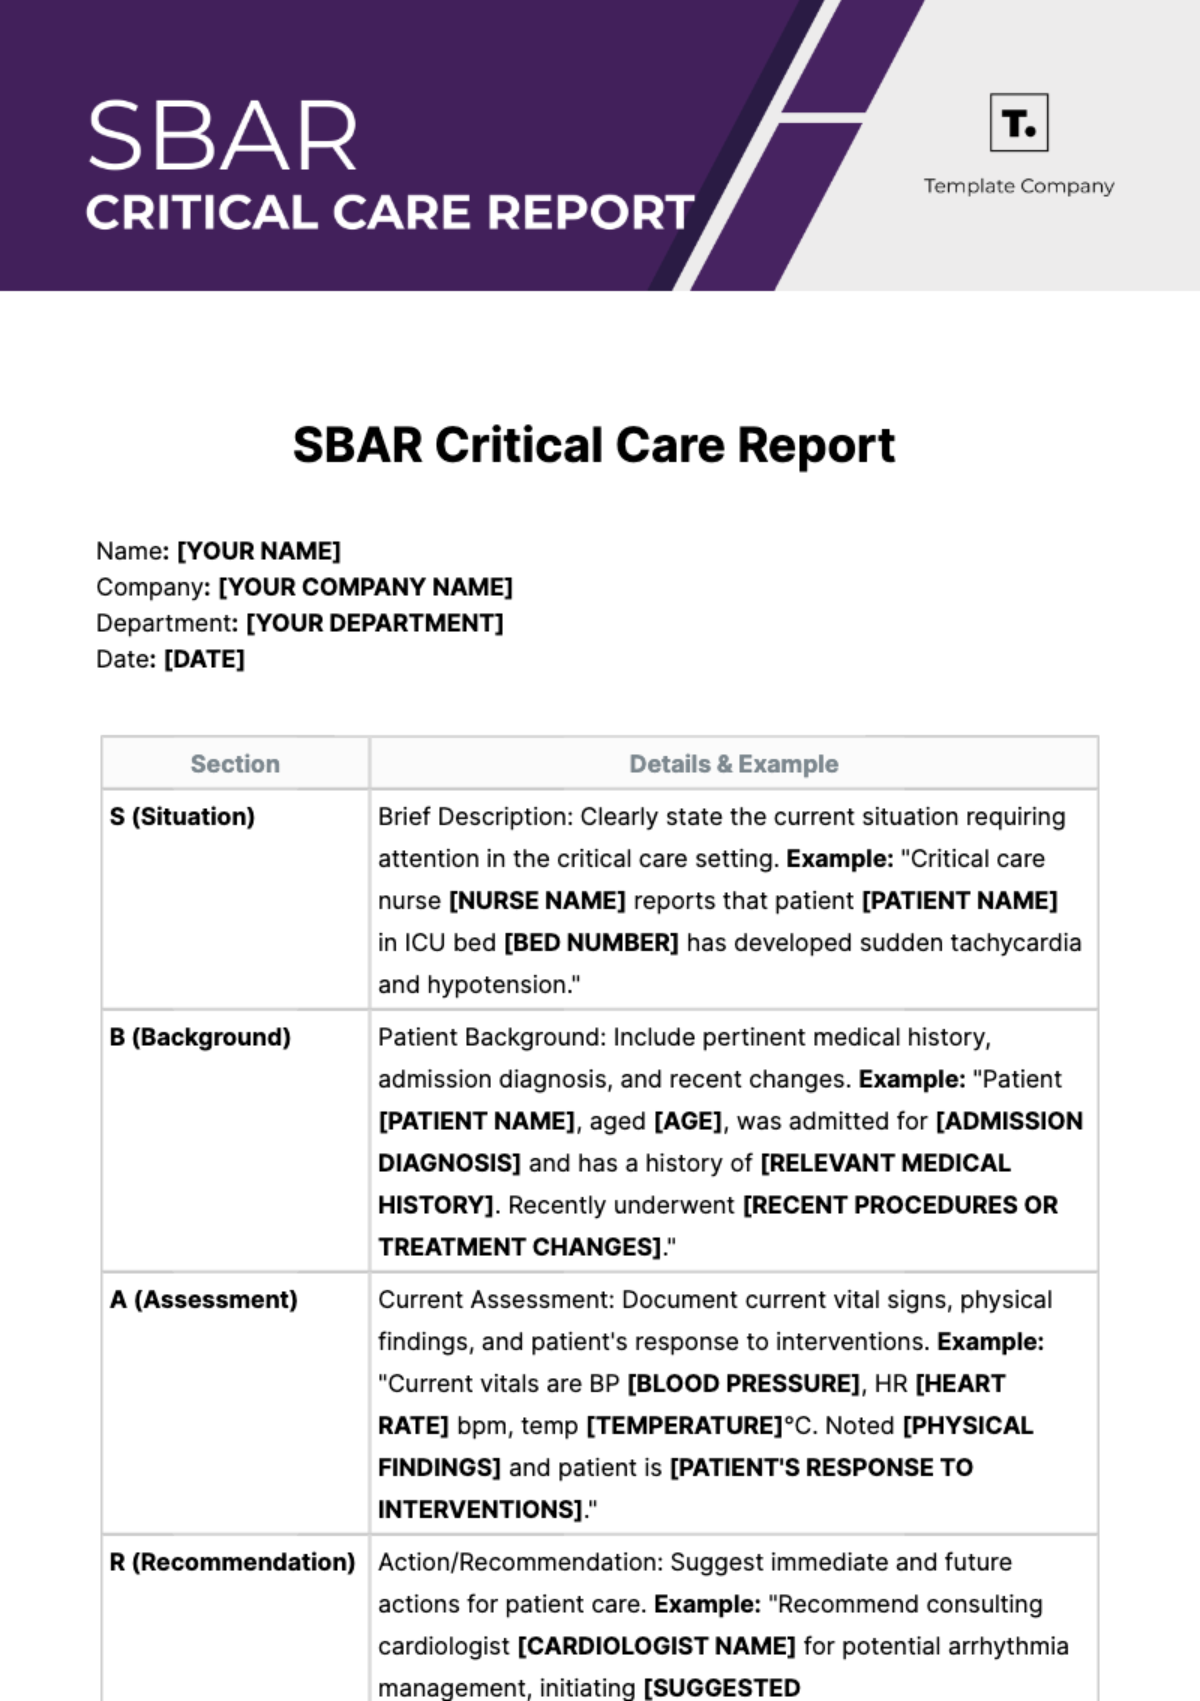 SBAR Critical Care Report Template